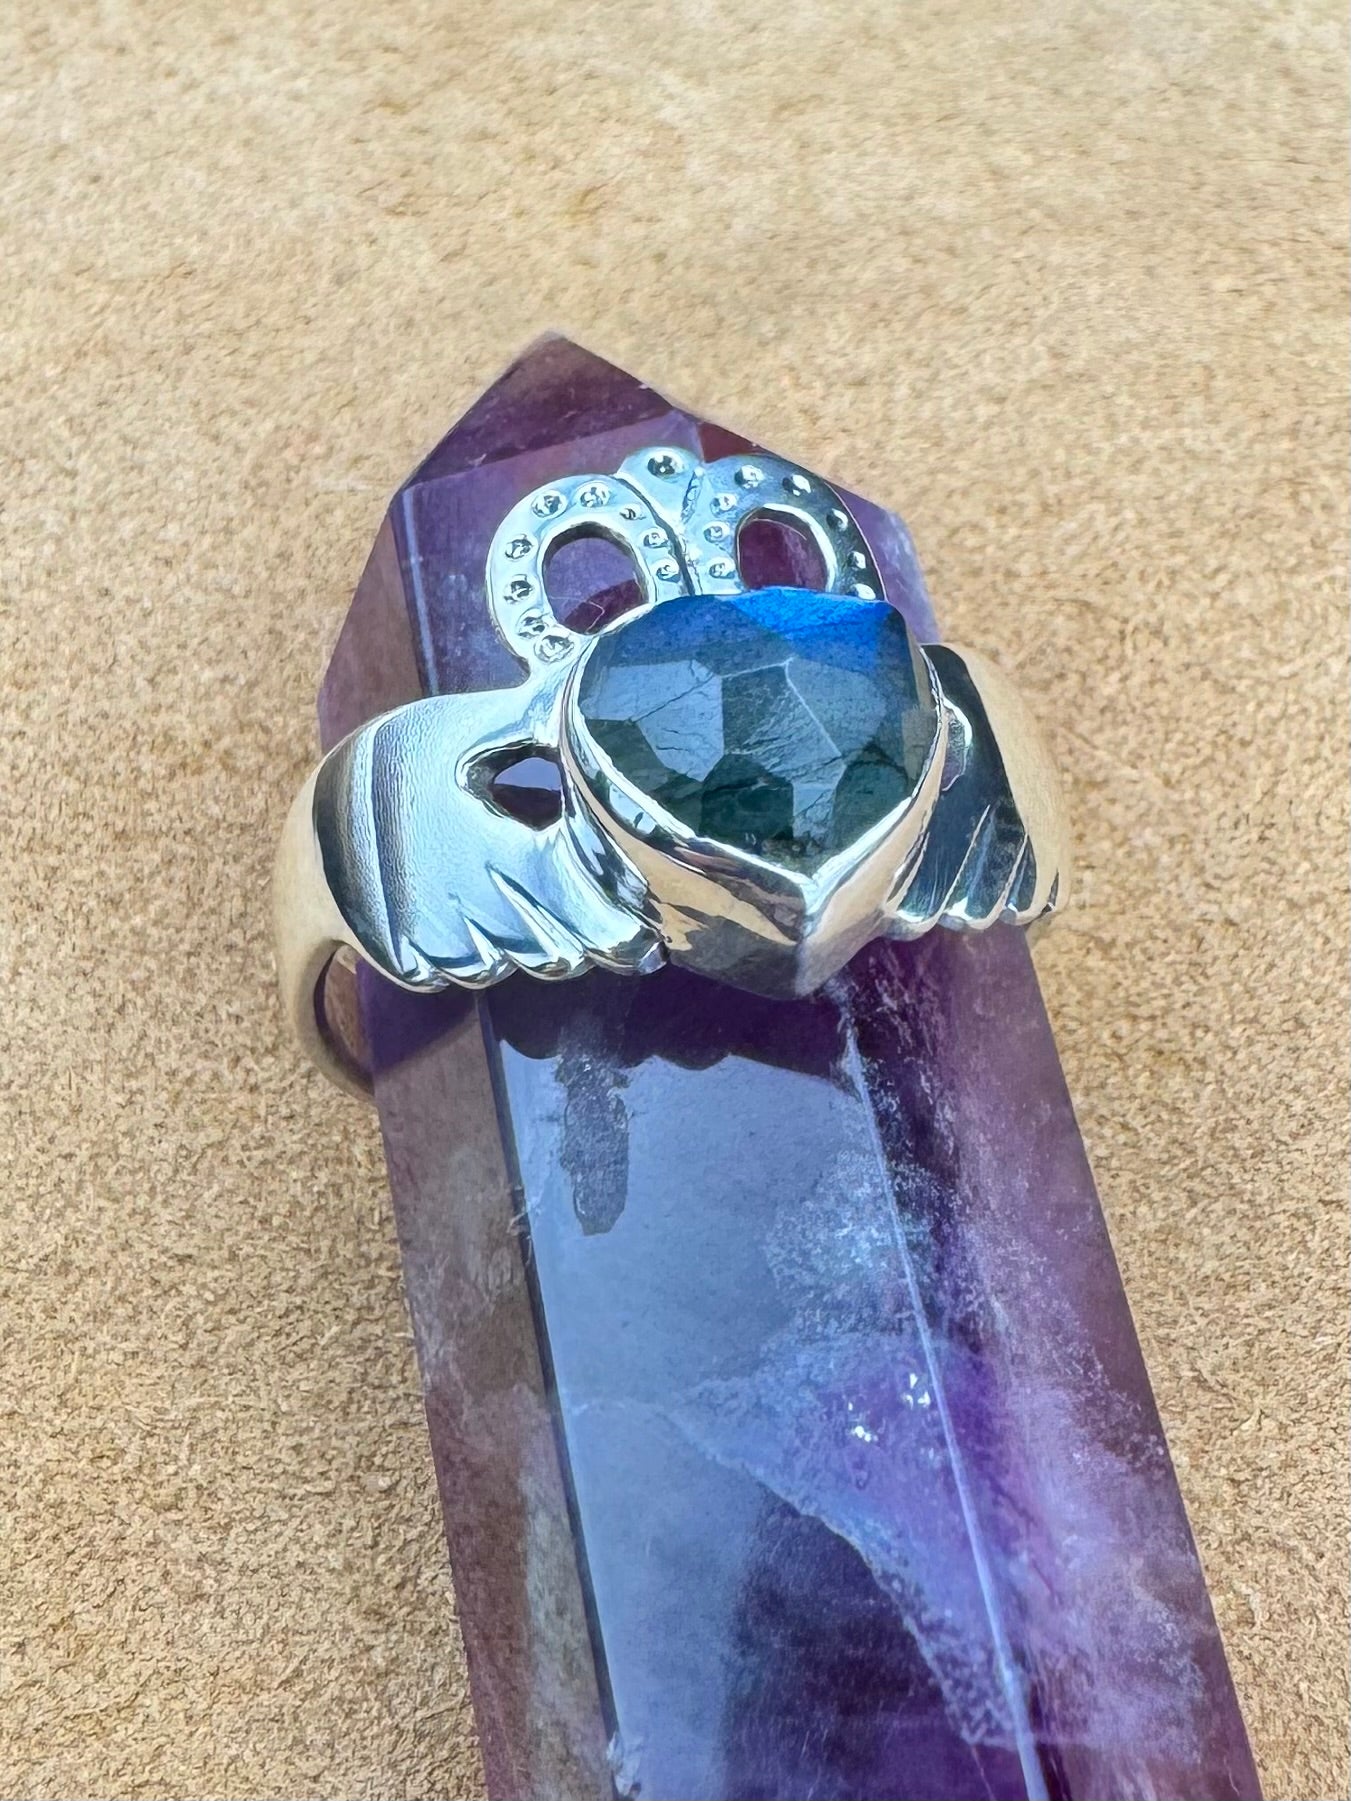 Blue Labradorite Claddagh Ring